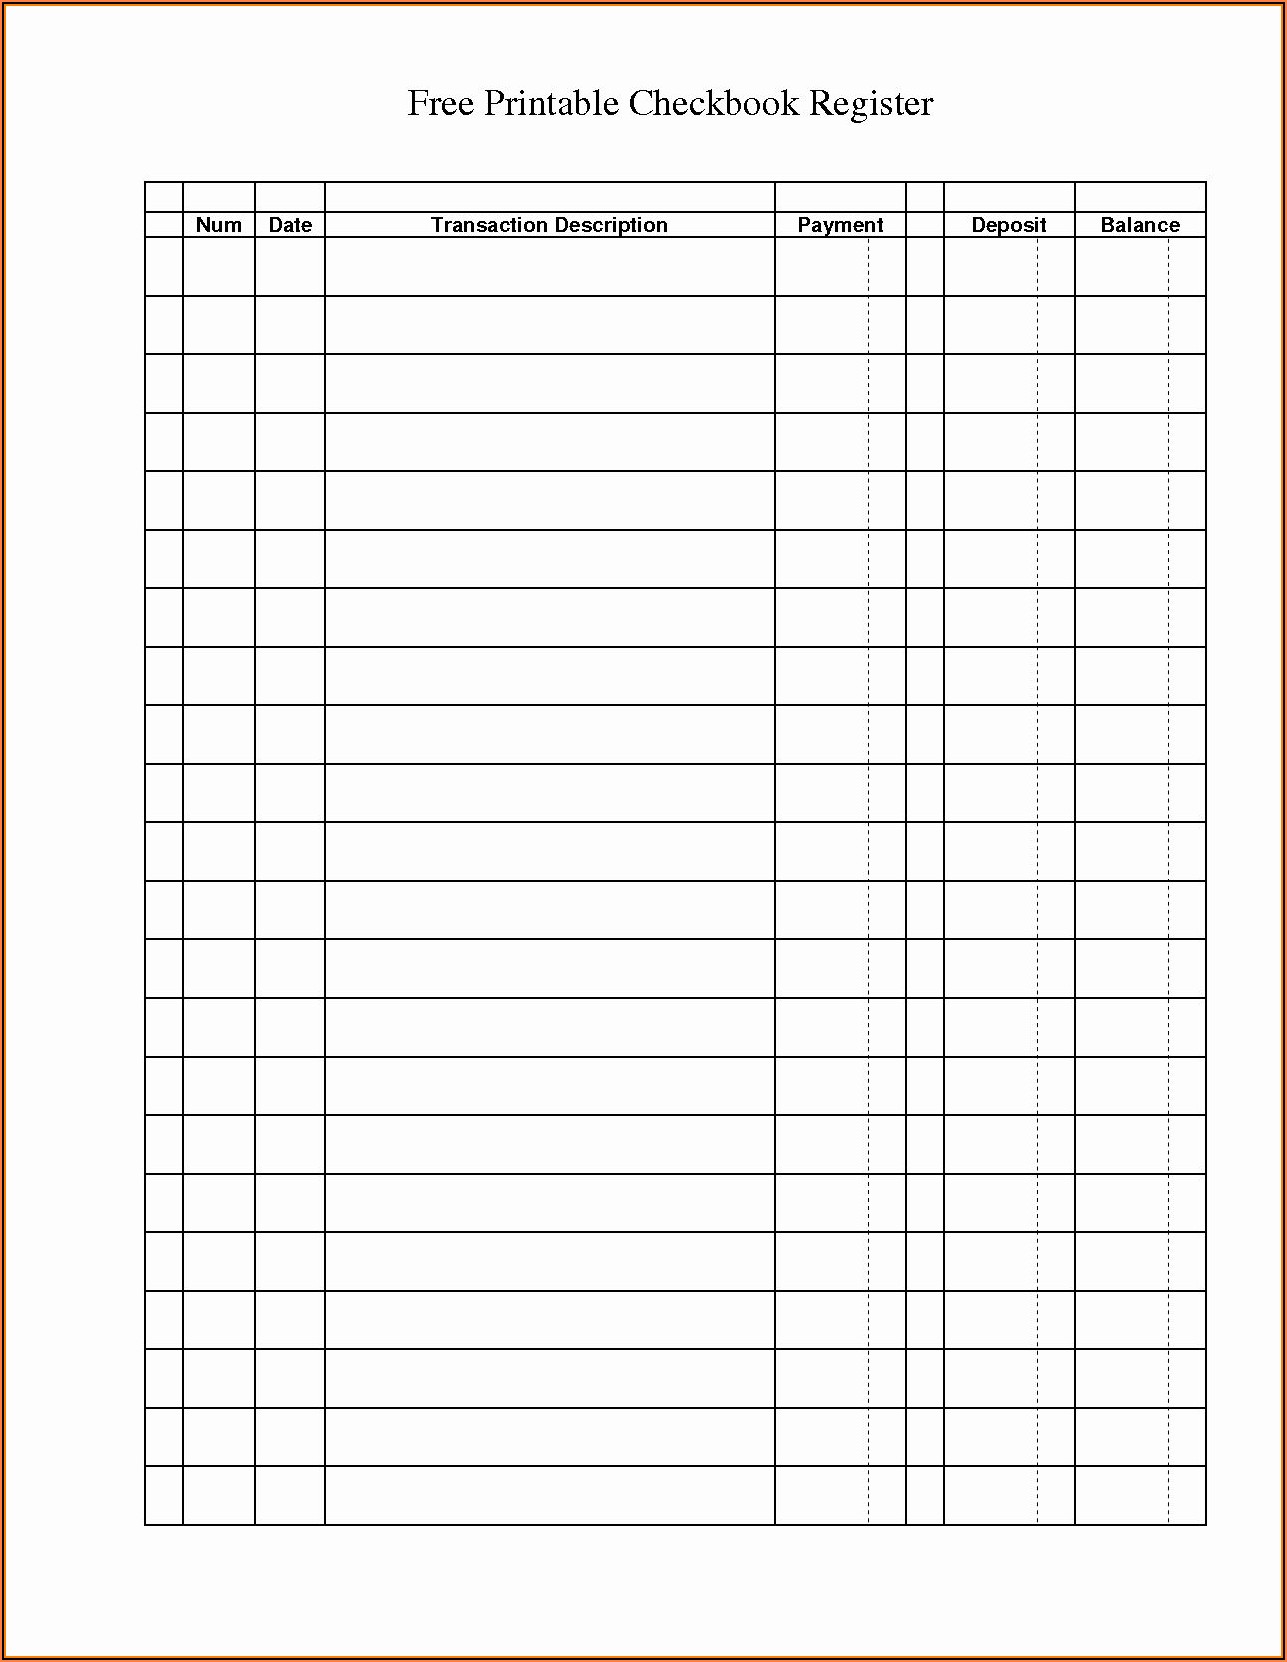 Free Checkbook Register Form